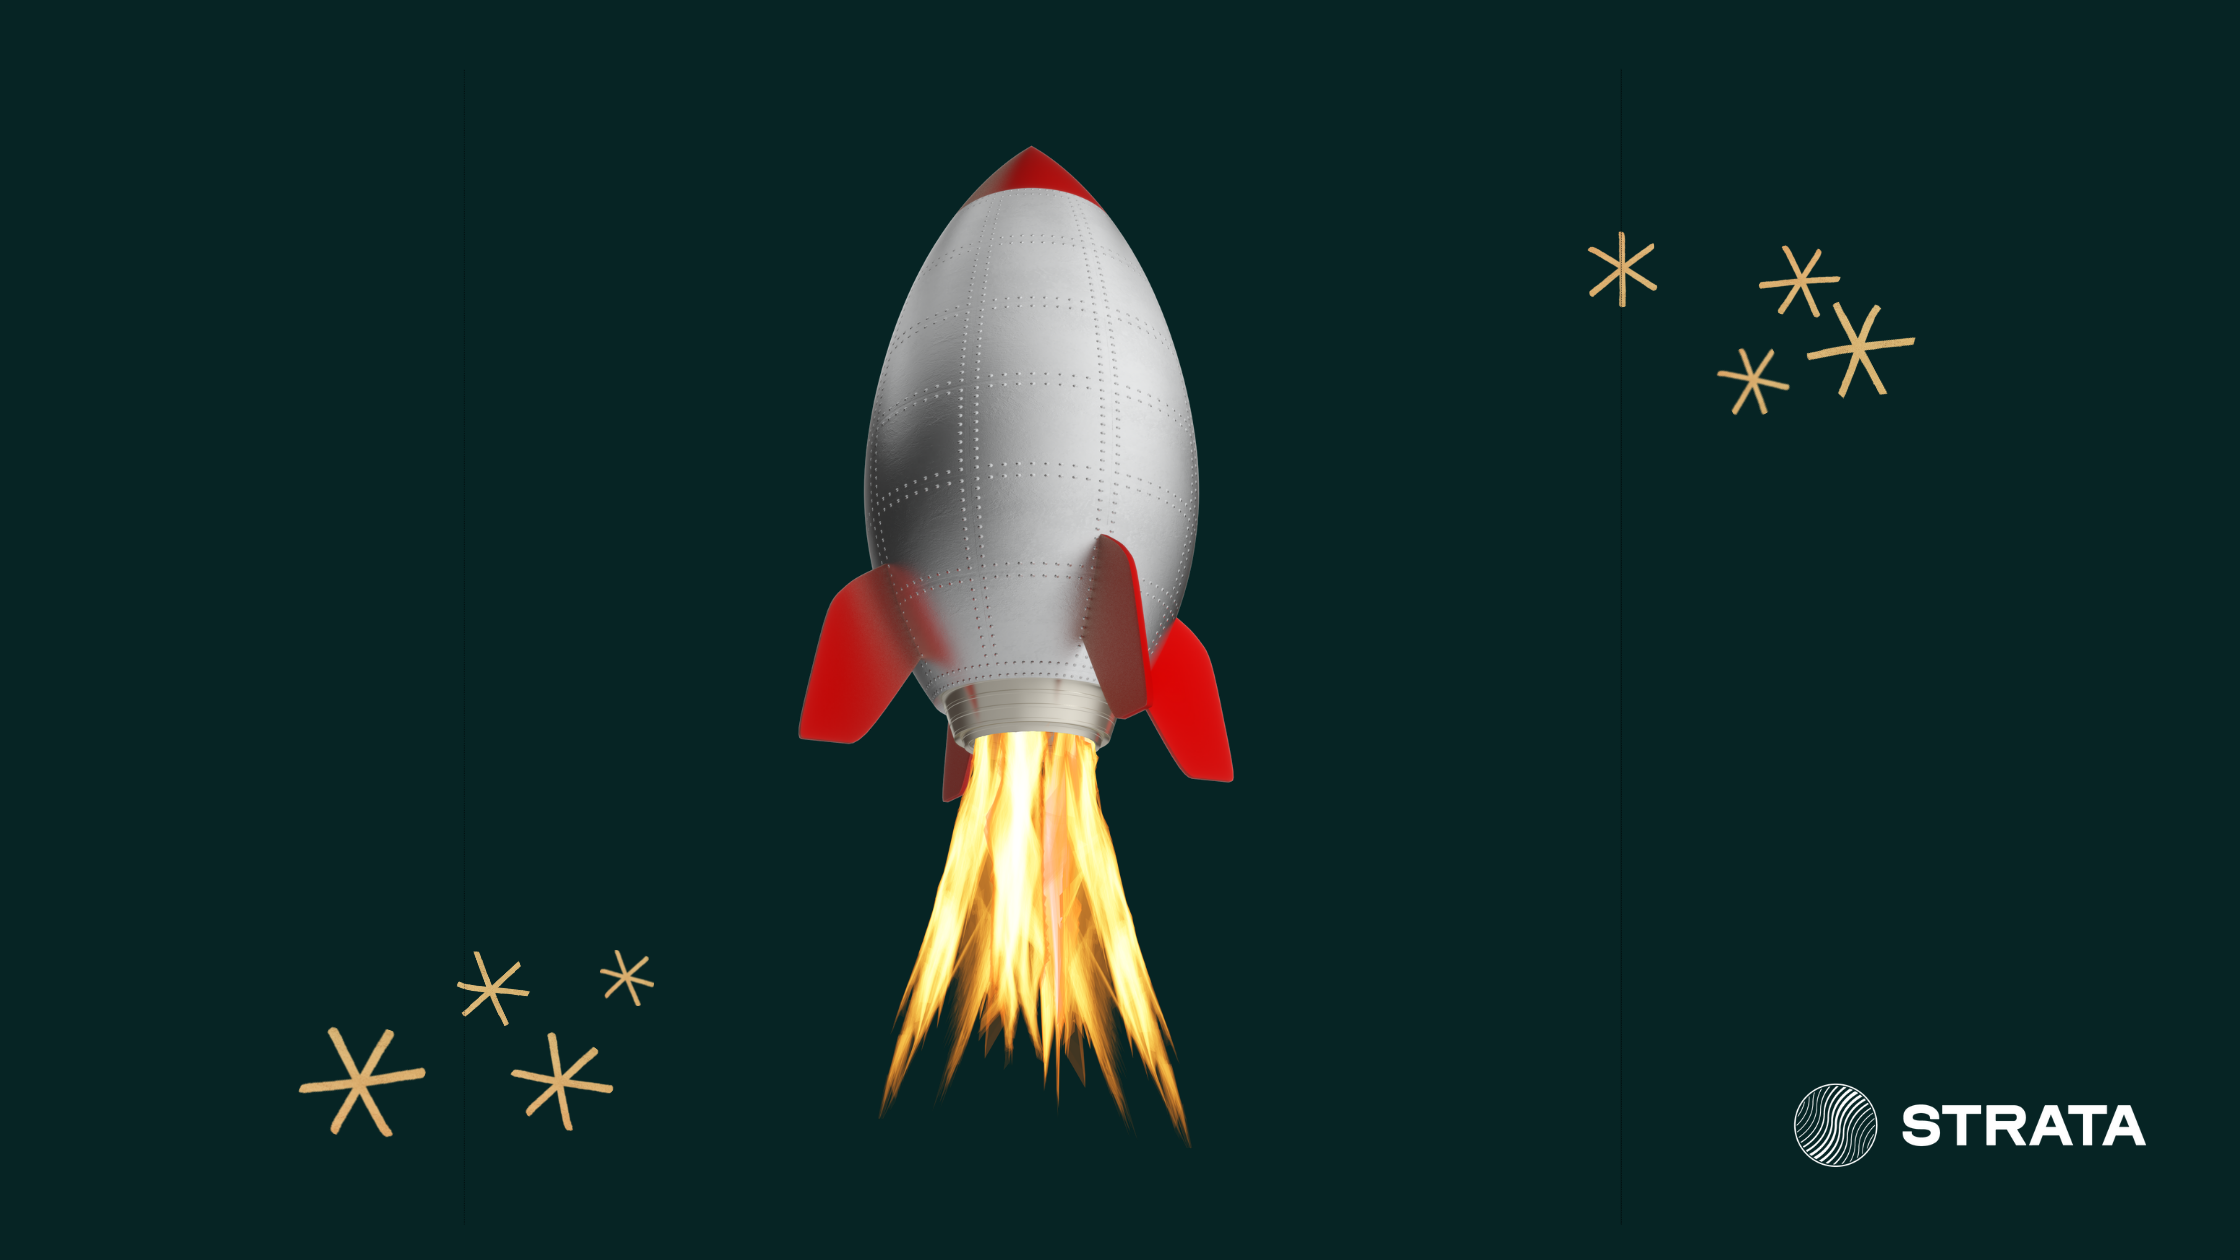 Image of rocket ship on black background